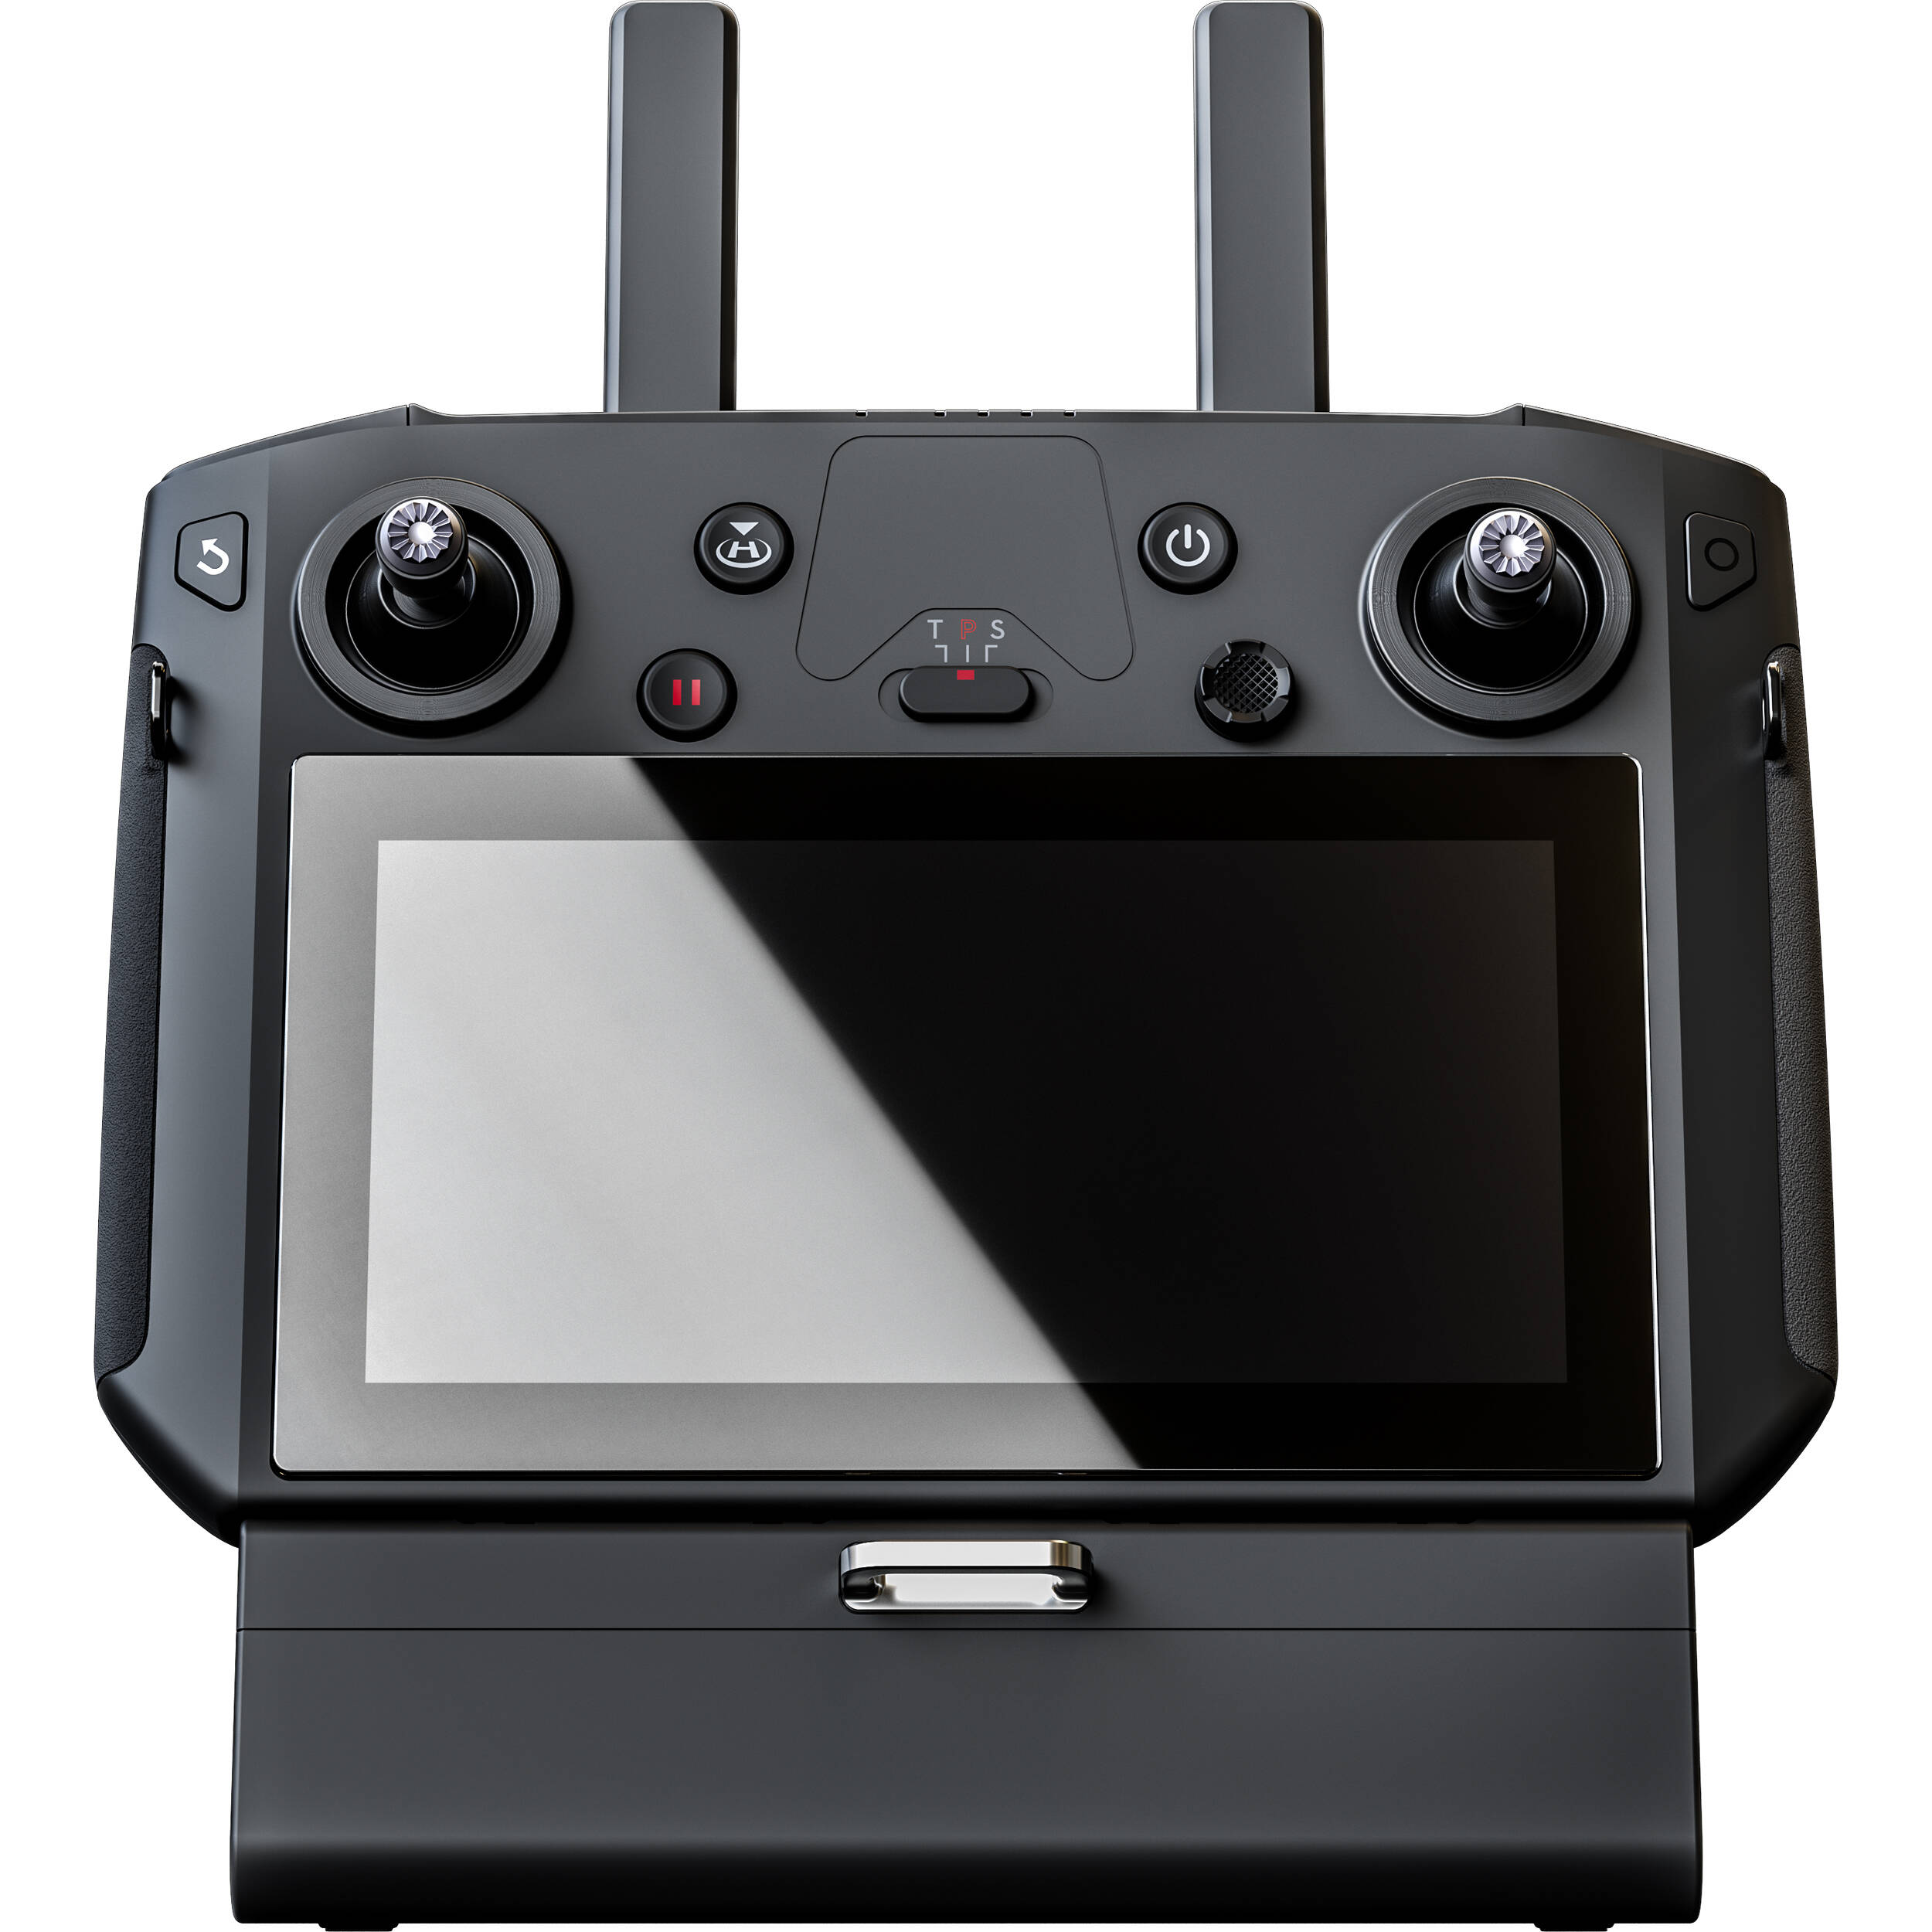 DJI RC Smart Controller – Influential Drones